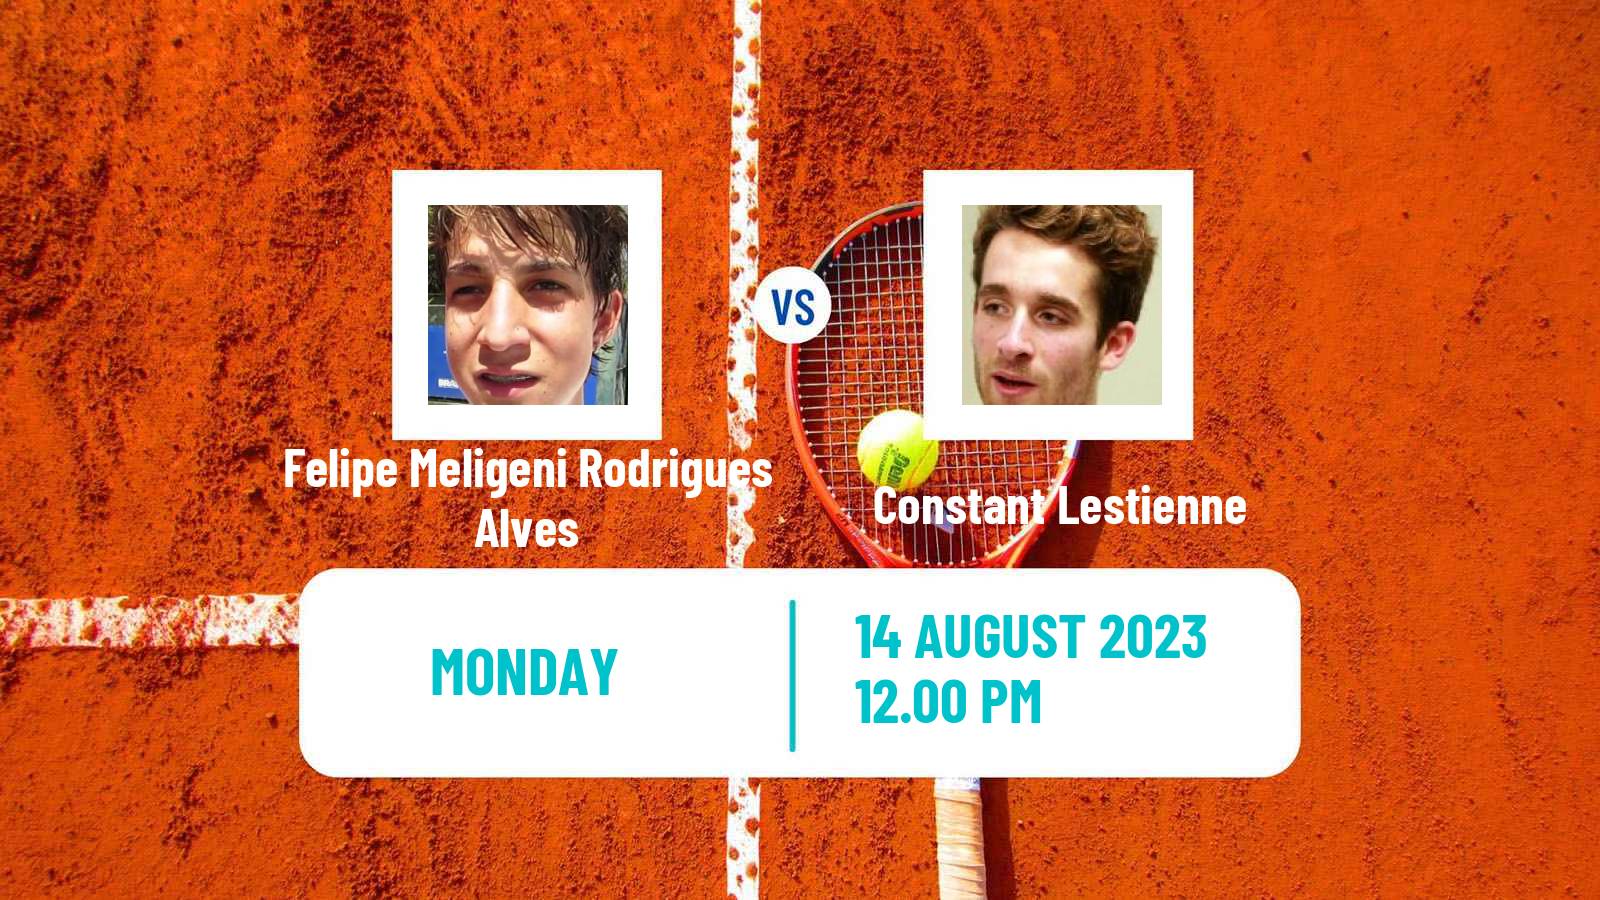 Tennis Stanford Challenger Men Felipe Meligeni Rodrigues Alves - Constant Lestienne